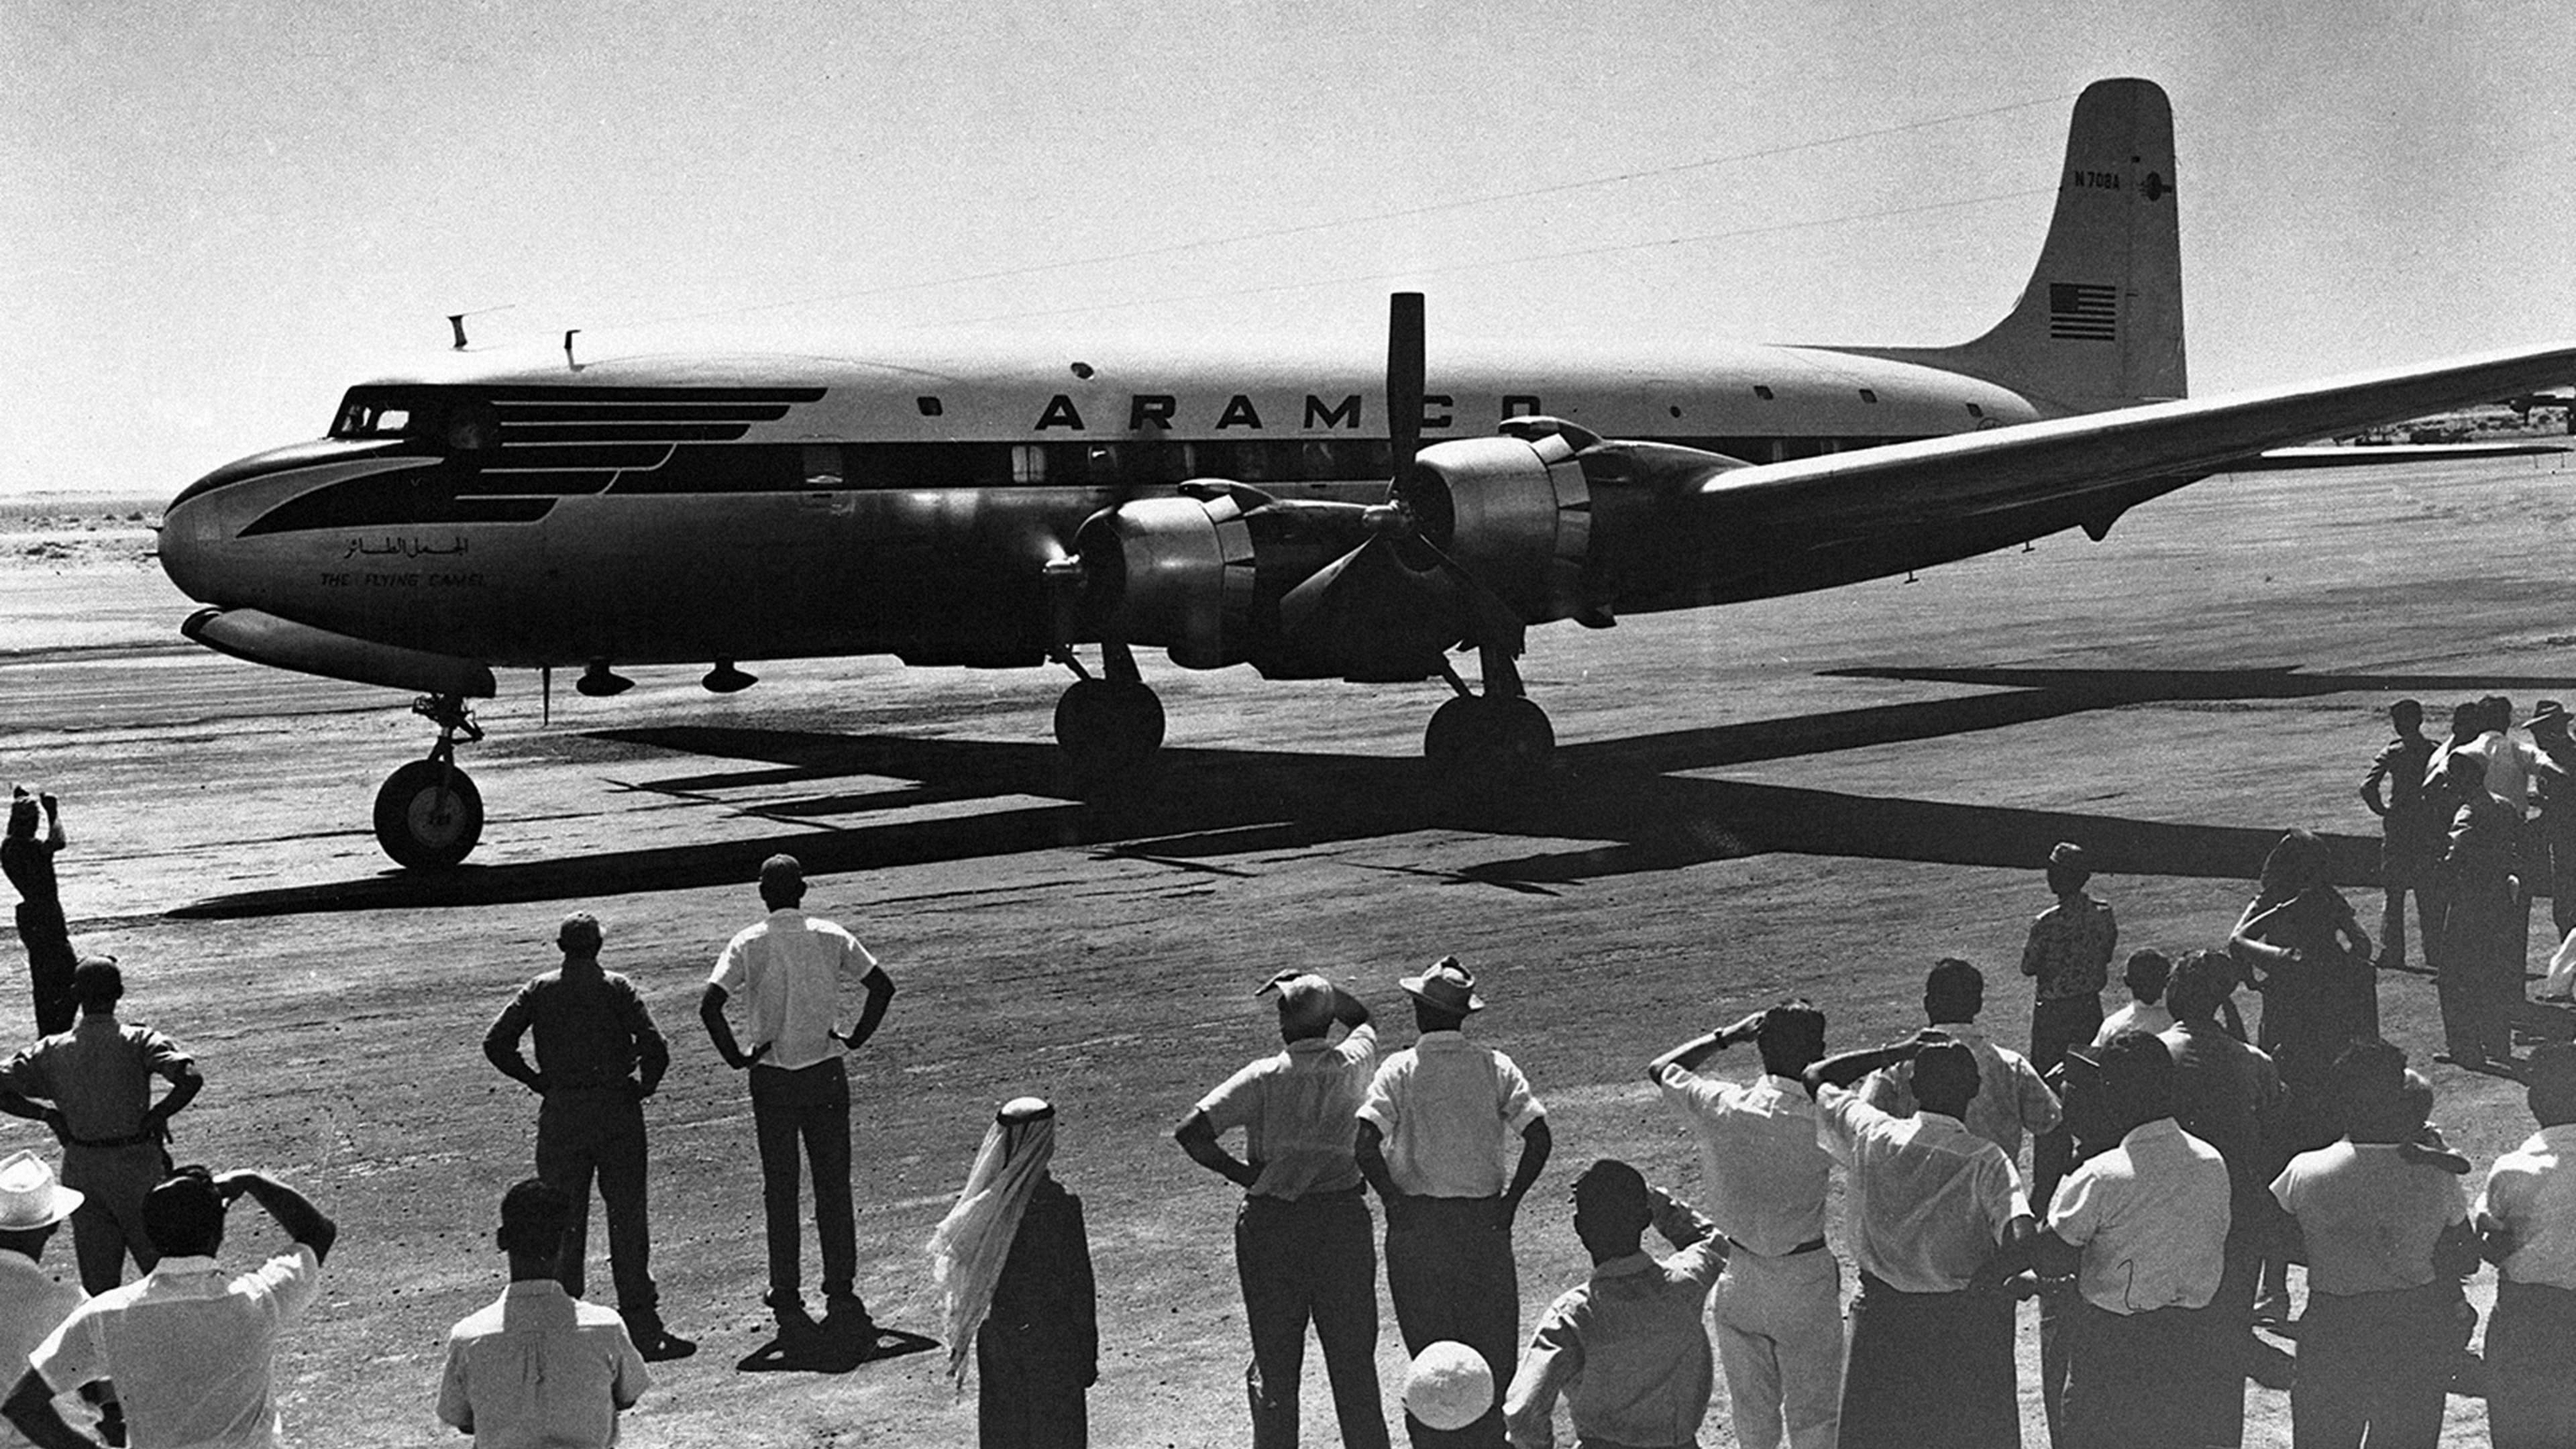 A group of people standing next to a Saudi Aramco (Mukamalah) plane at a landing strip